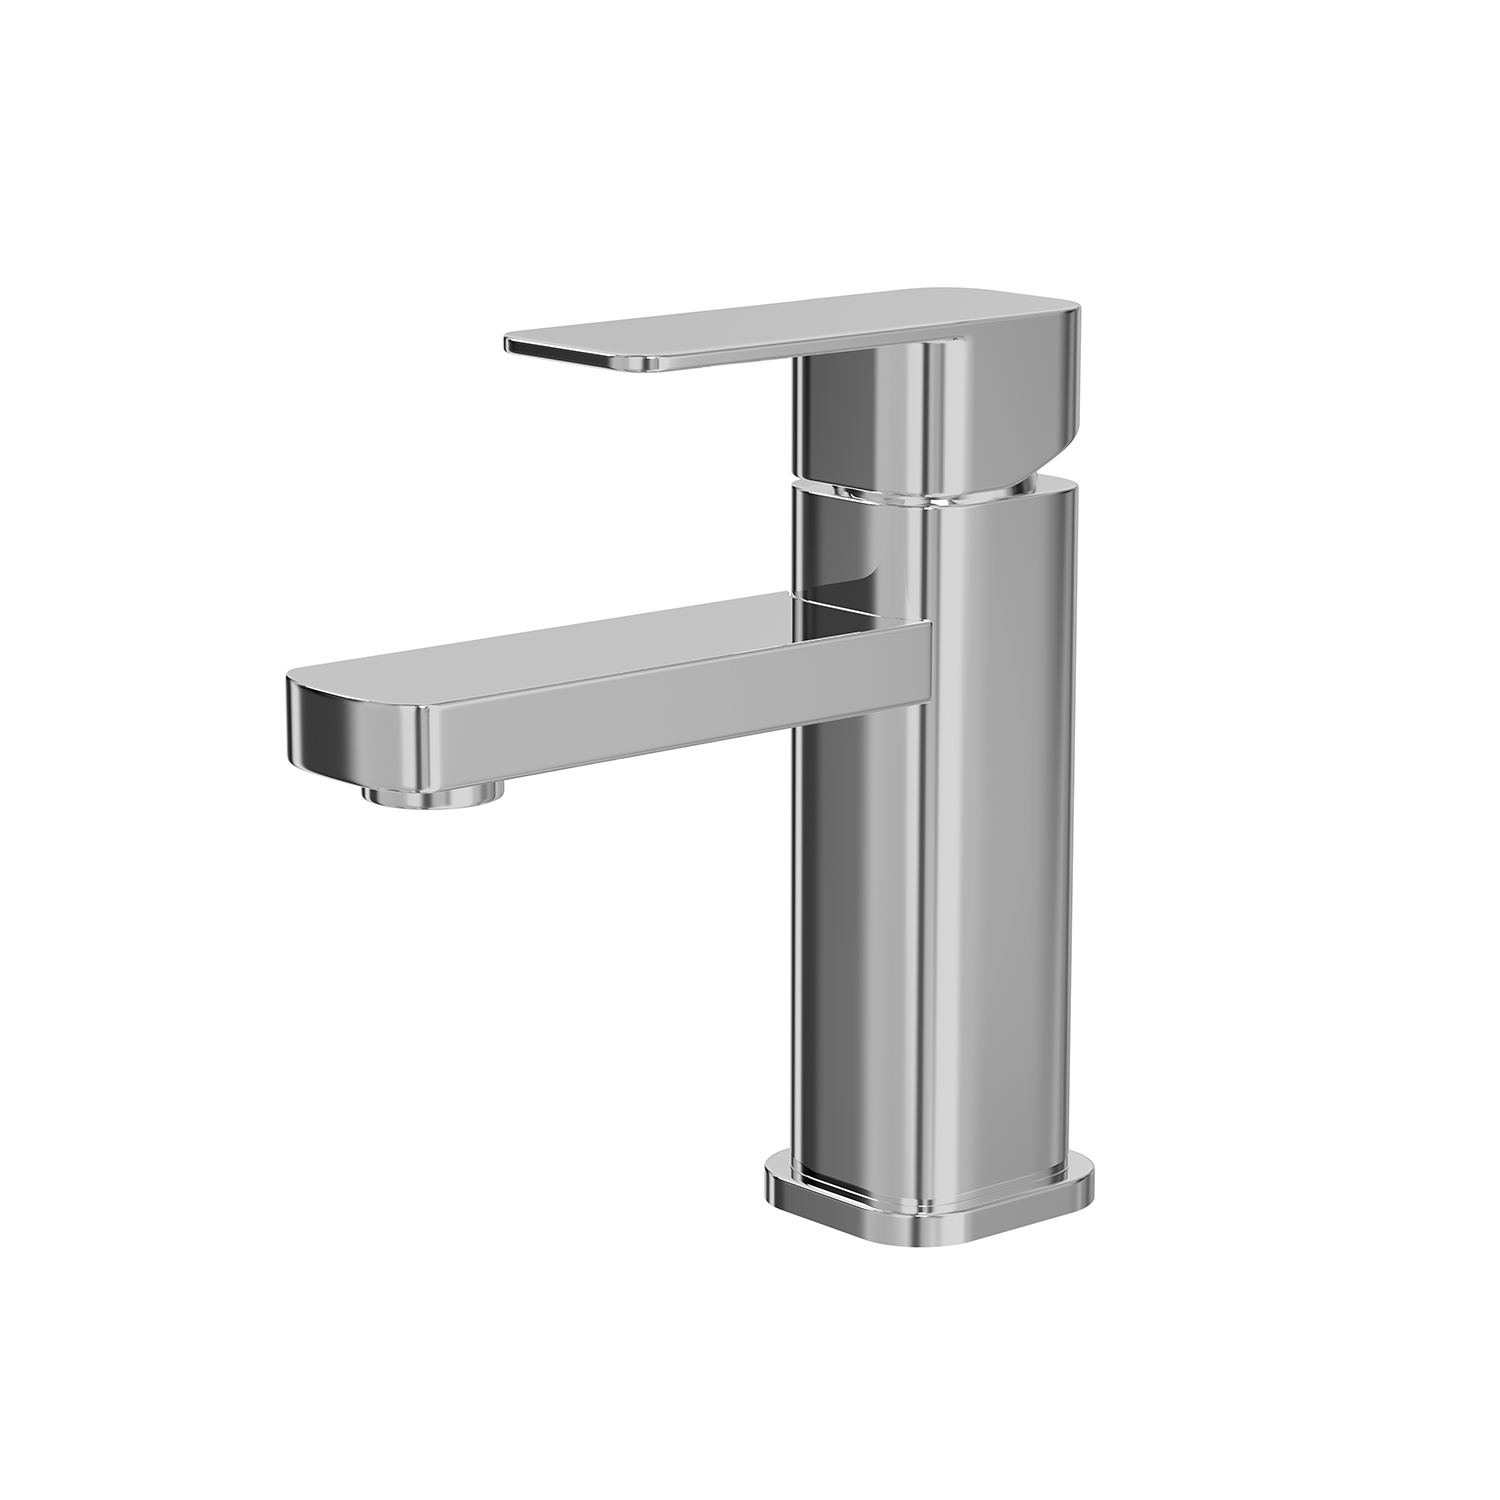 DAX Single Handle Bathroom Faucet, Brass Body, Chrome Finish, 4 x 7 Inches (DAX-6941A)